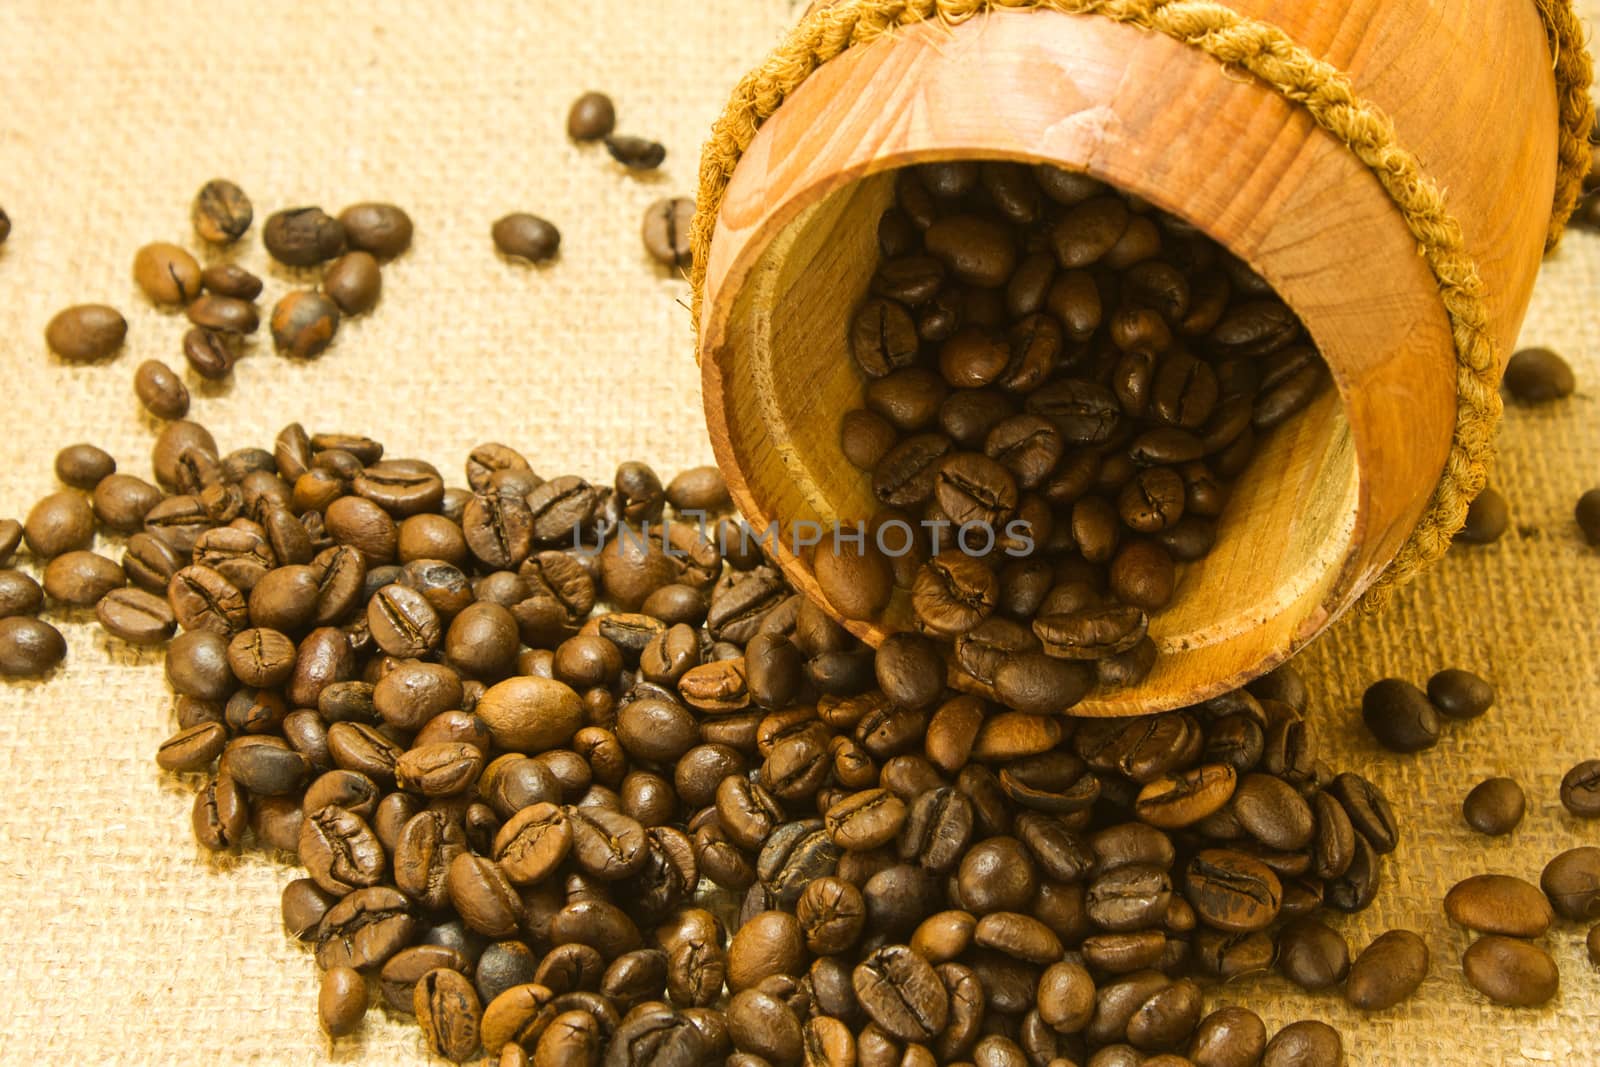 Coffee beans in a wooden keg by LenoraA